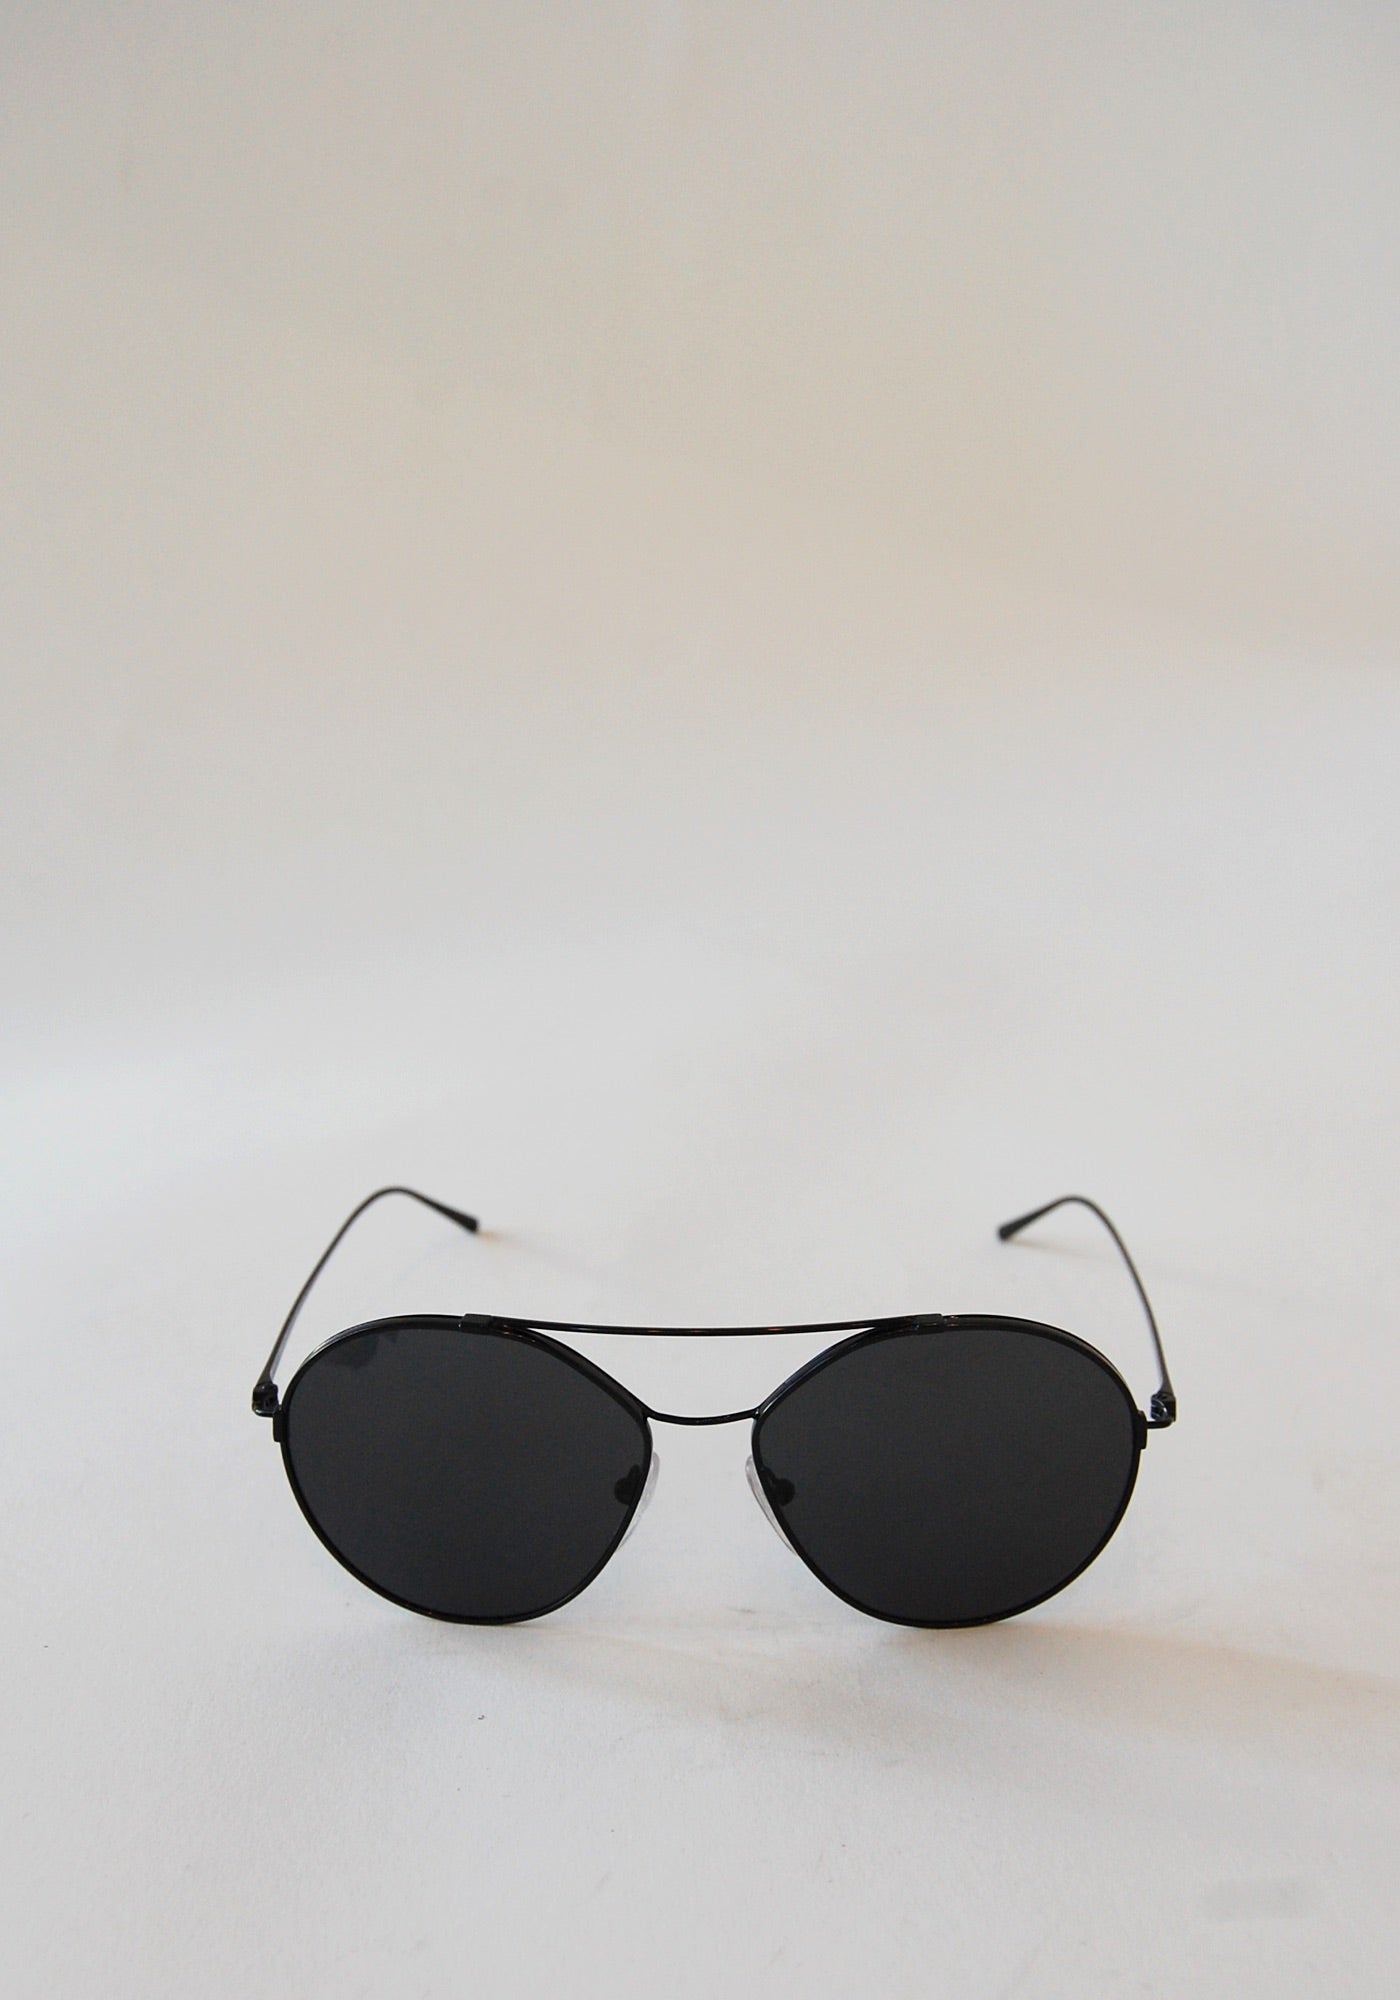 Prada Black Round Sunglasses